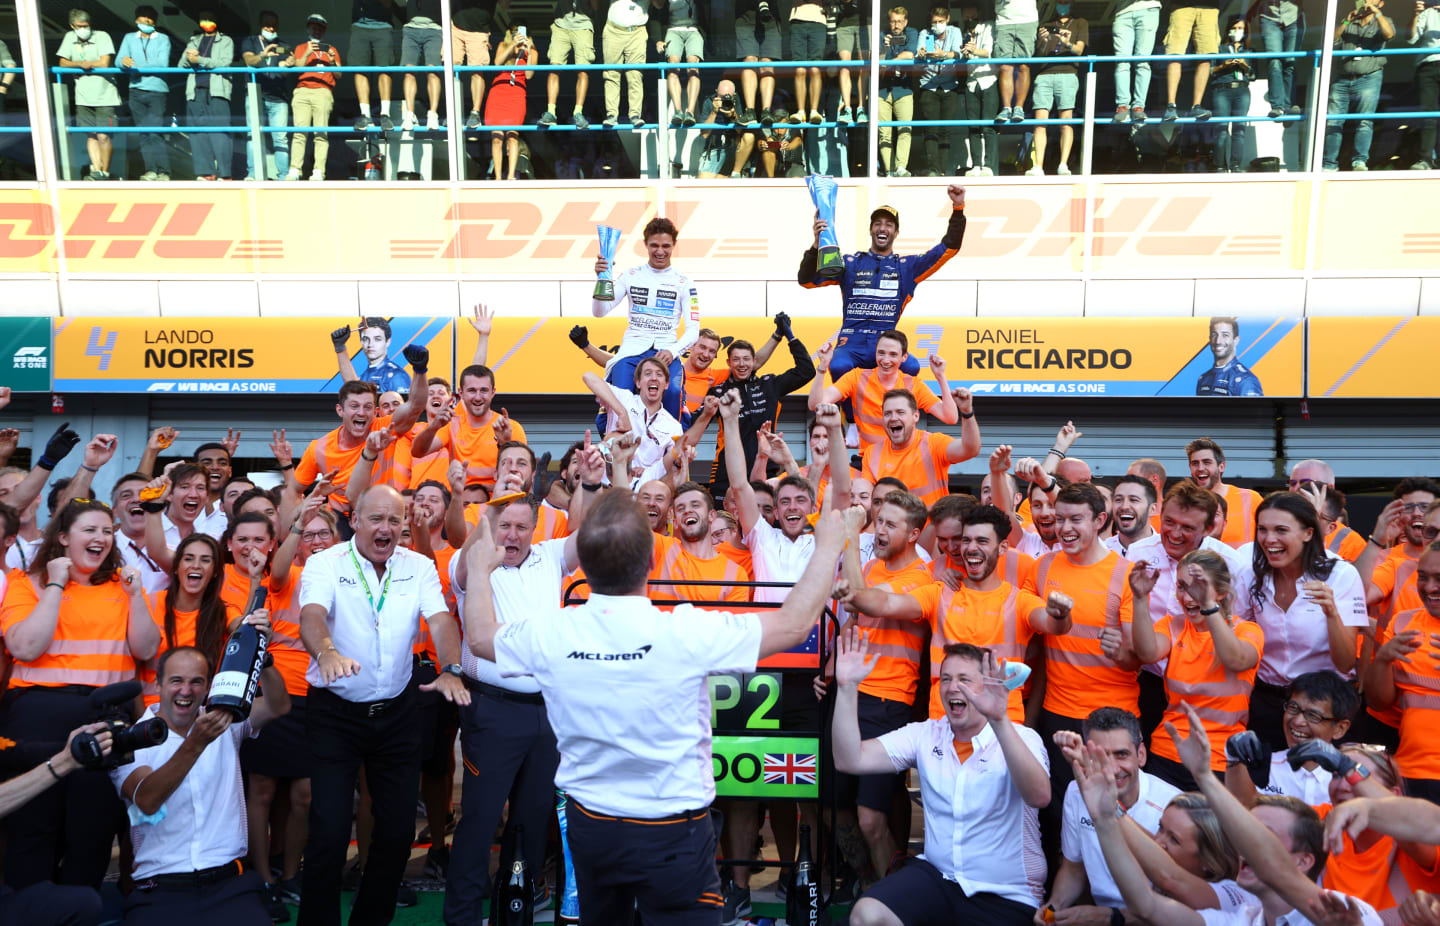 MONZA, ITALY - SEPTEMBER 12: Race winner Daniel Ricciardo of Australia and McLaren F1 and second